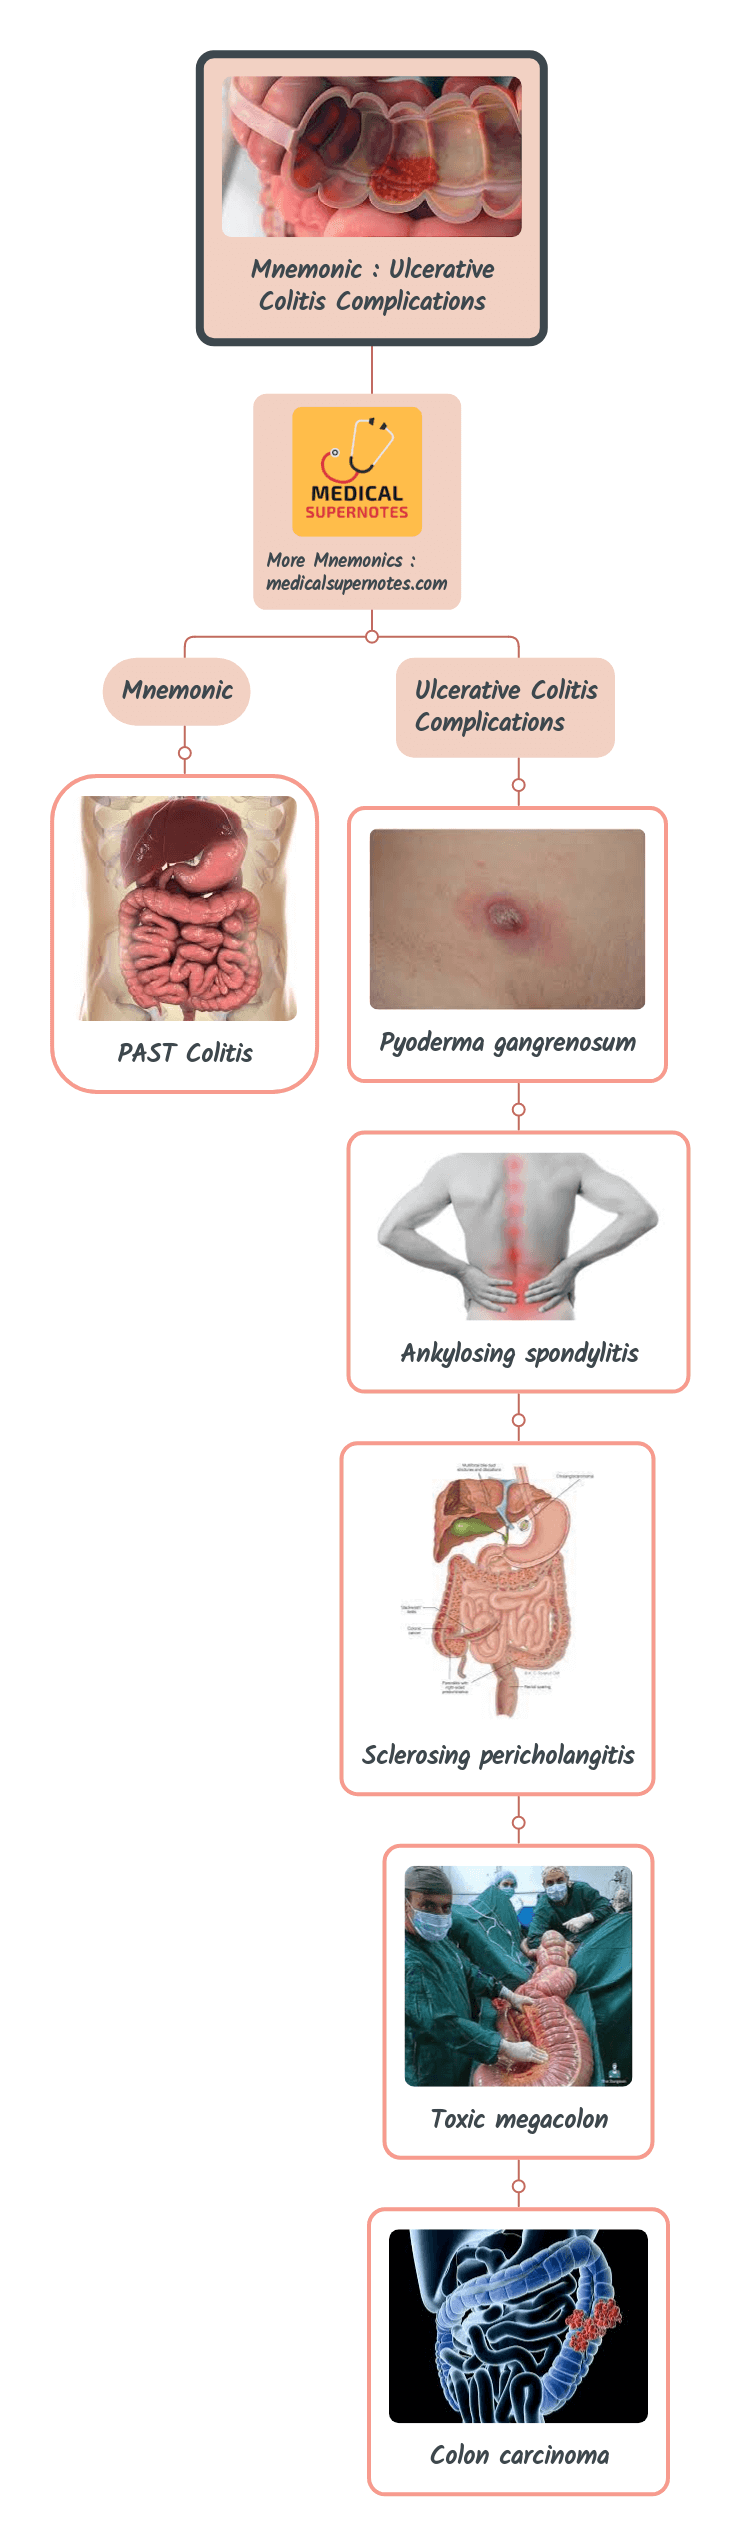 Mnemonic _ Ulcerative Colitis Complications